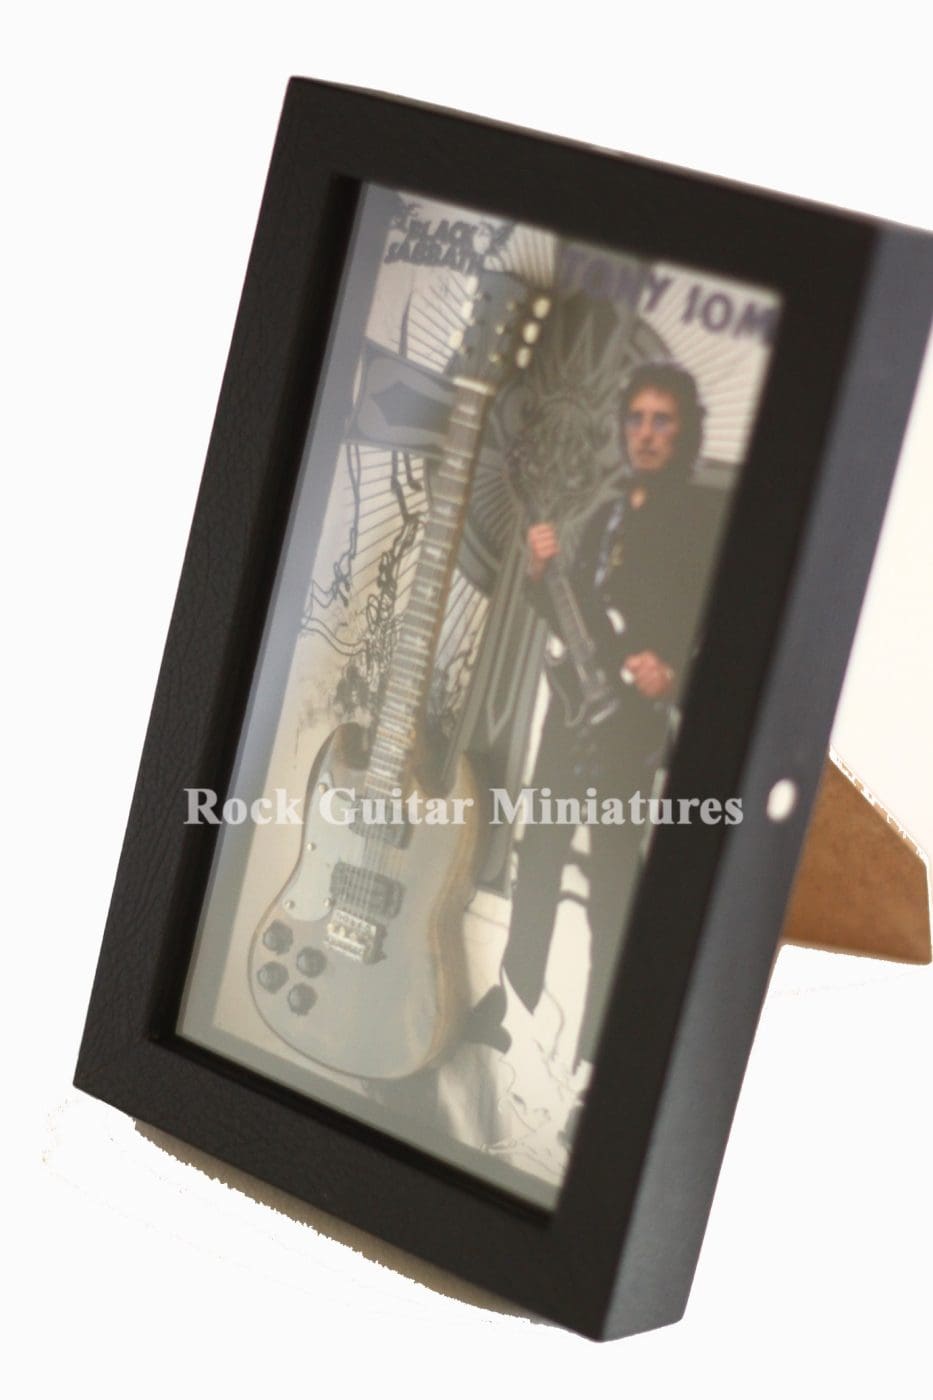 RGM8890 Tony Iommi Black Sabbah Miniature Guitar Collection in Shadowbox Frame 